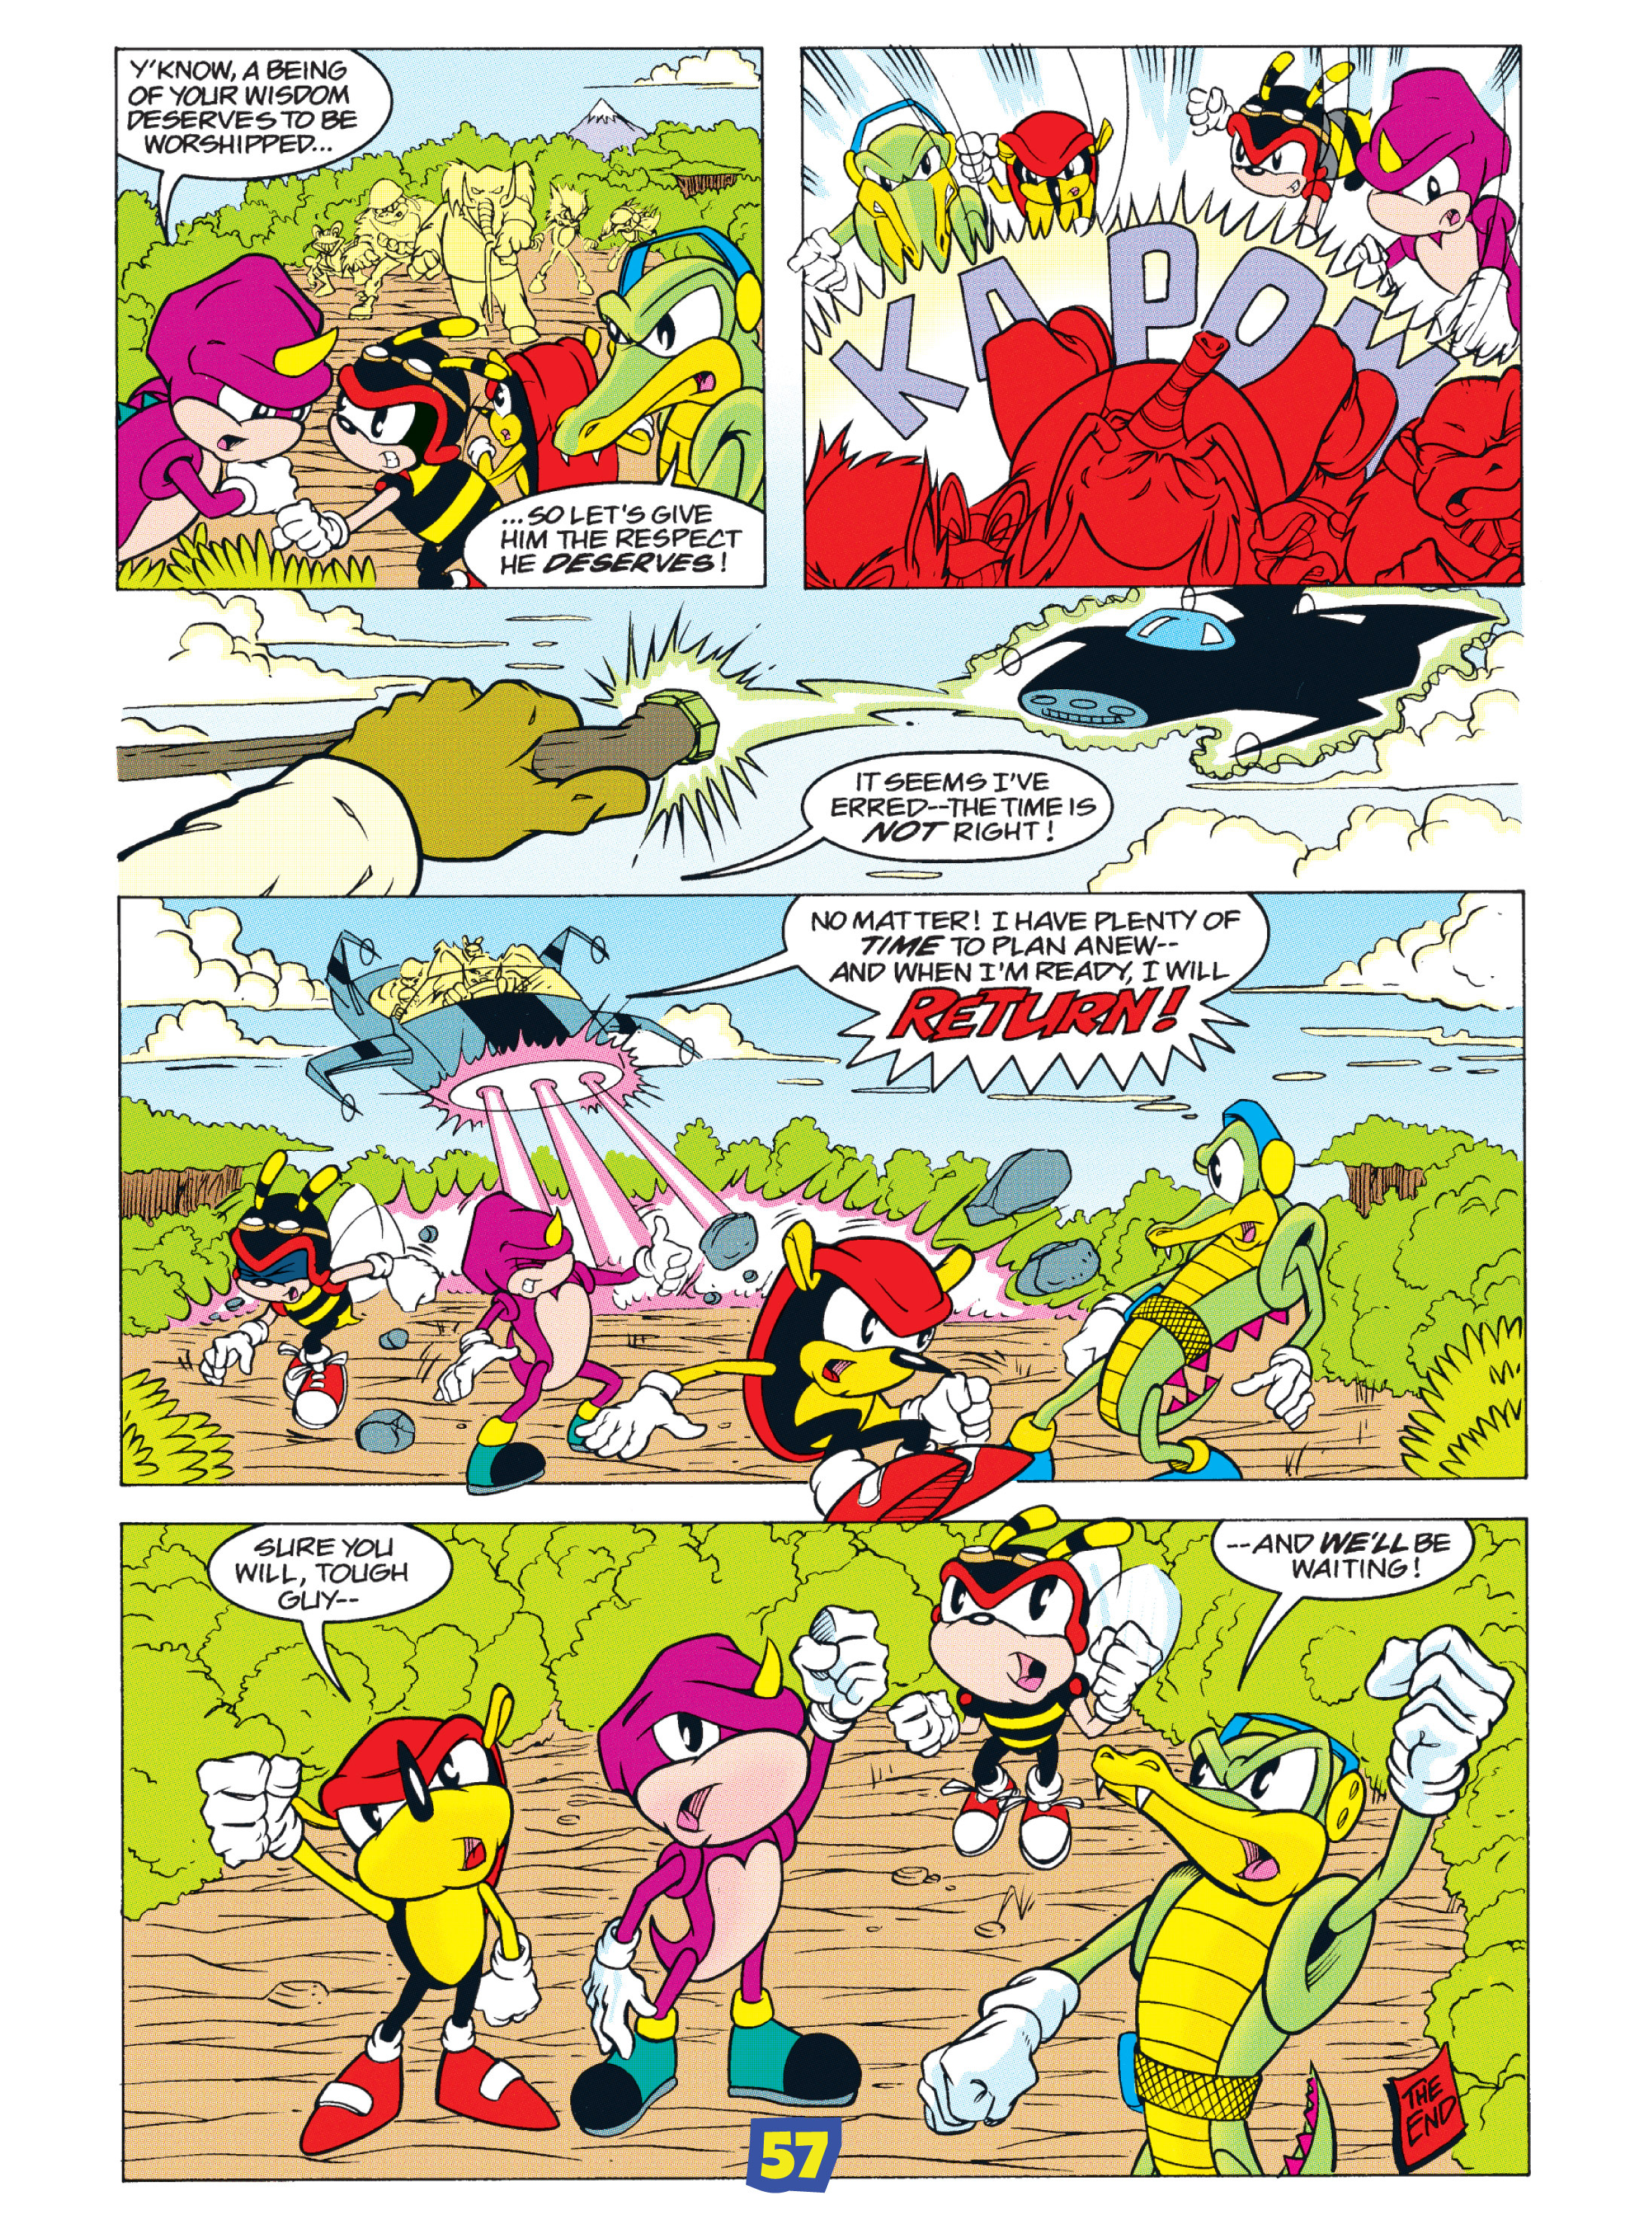 Mighty the Armadillo (Archie Comics)